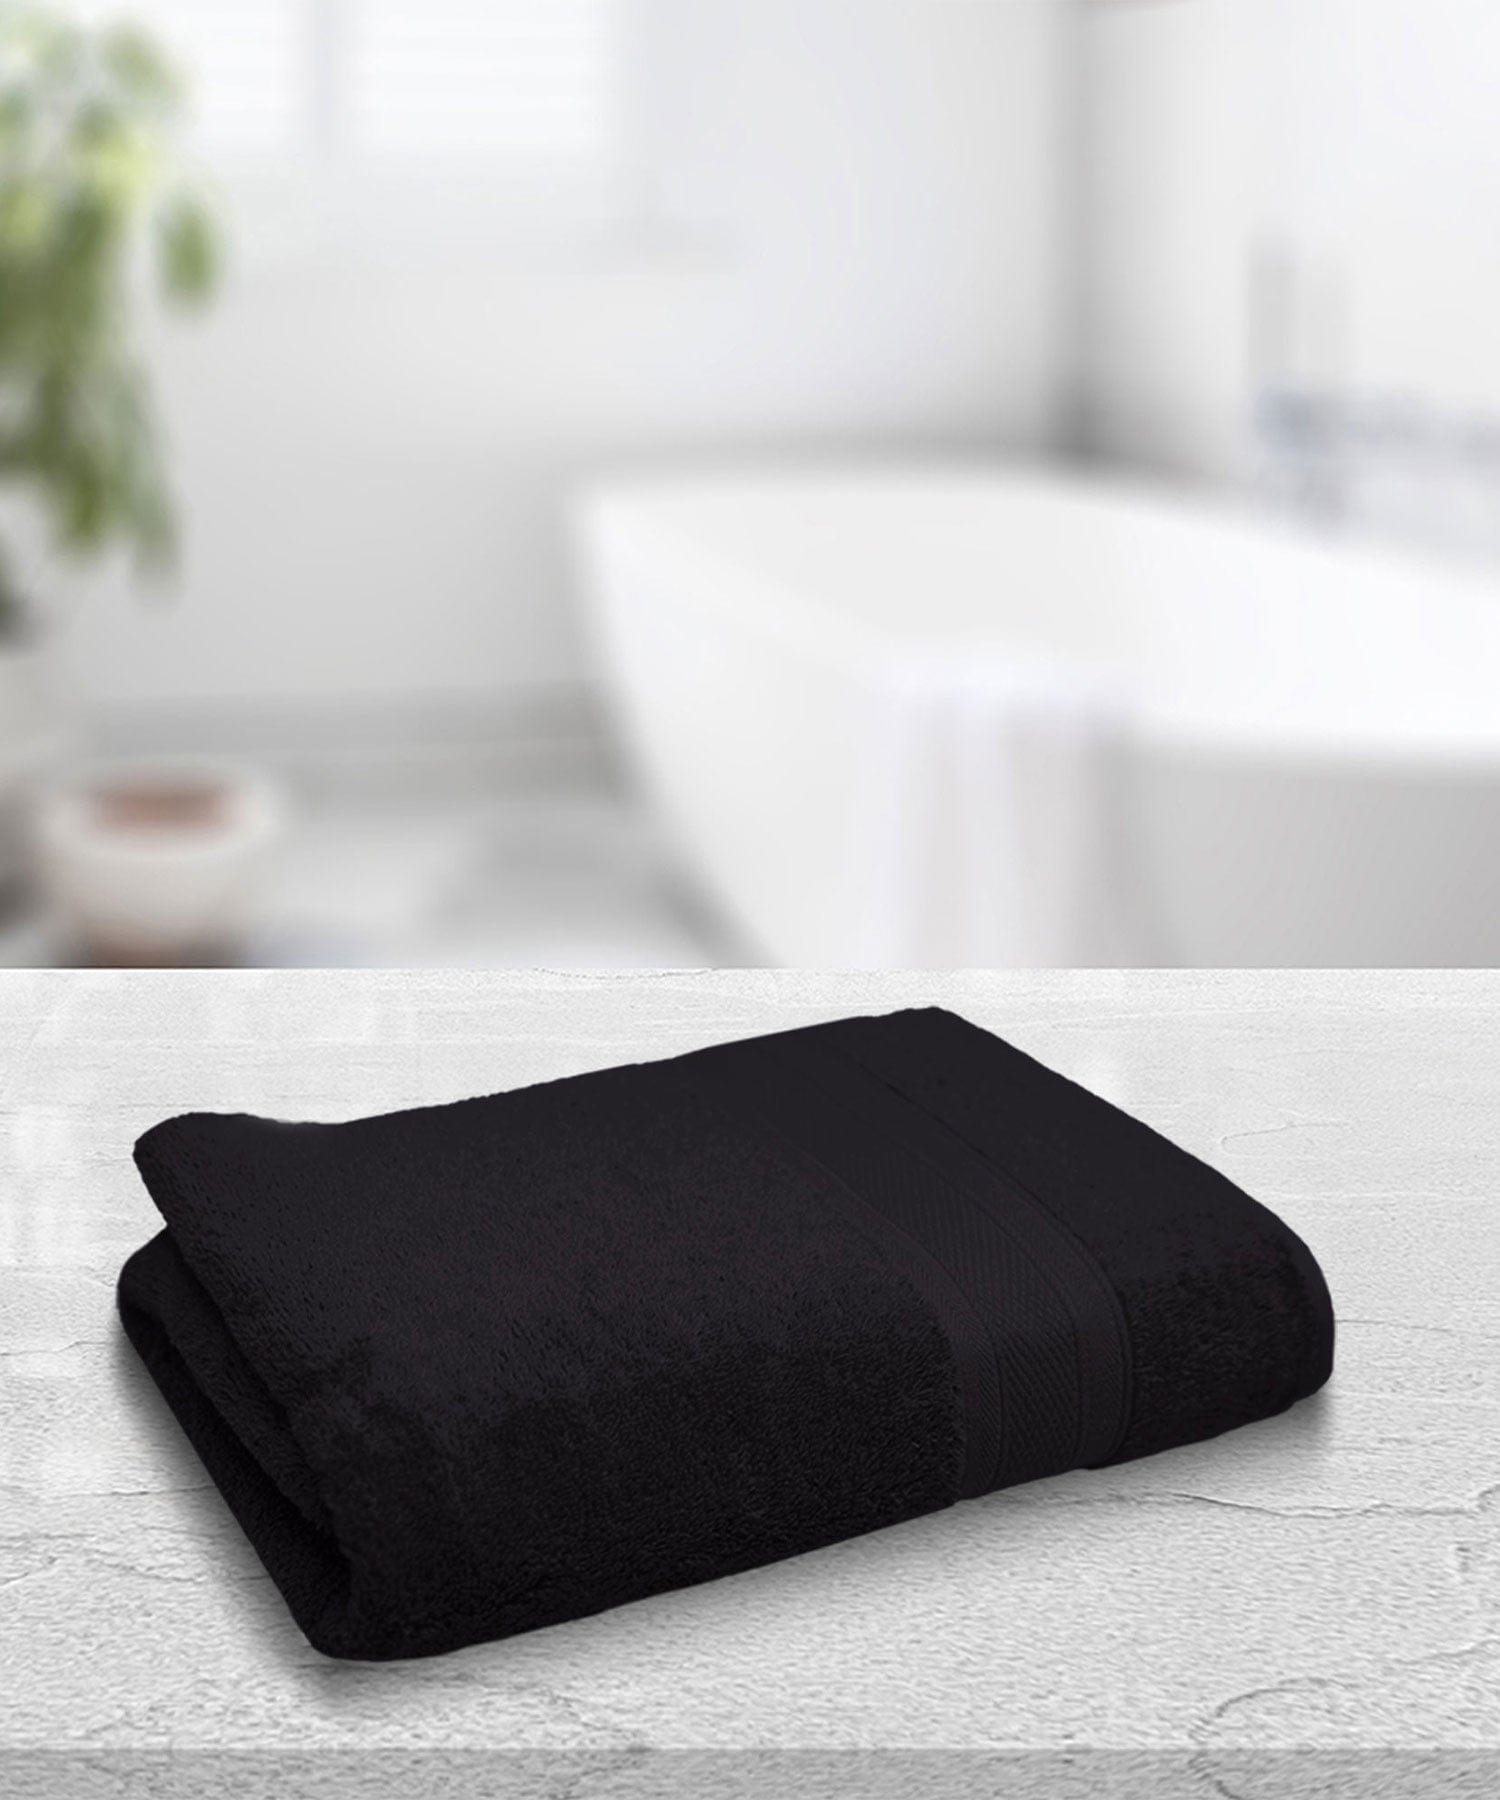 Bath Towel ₹599/-